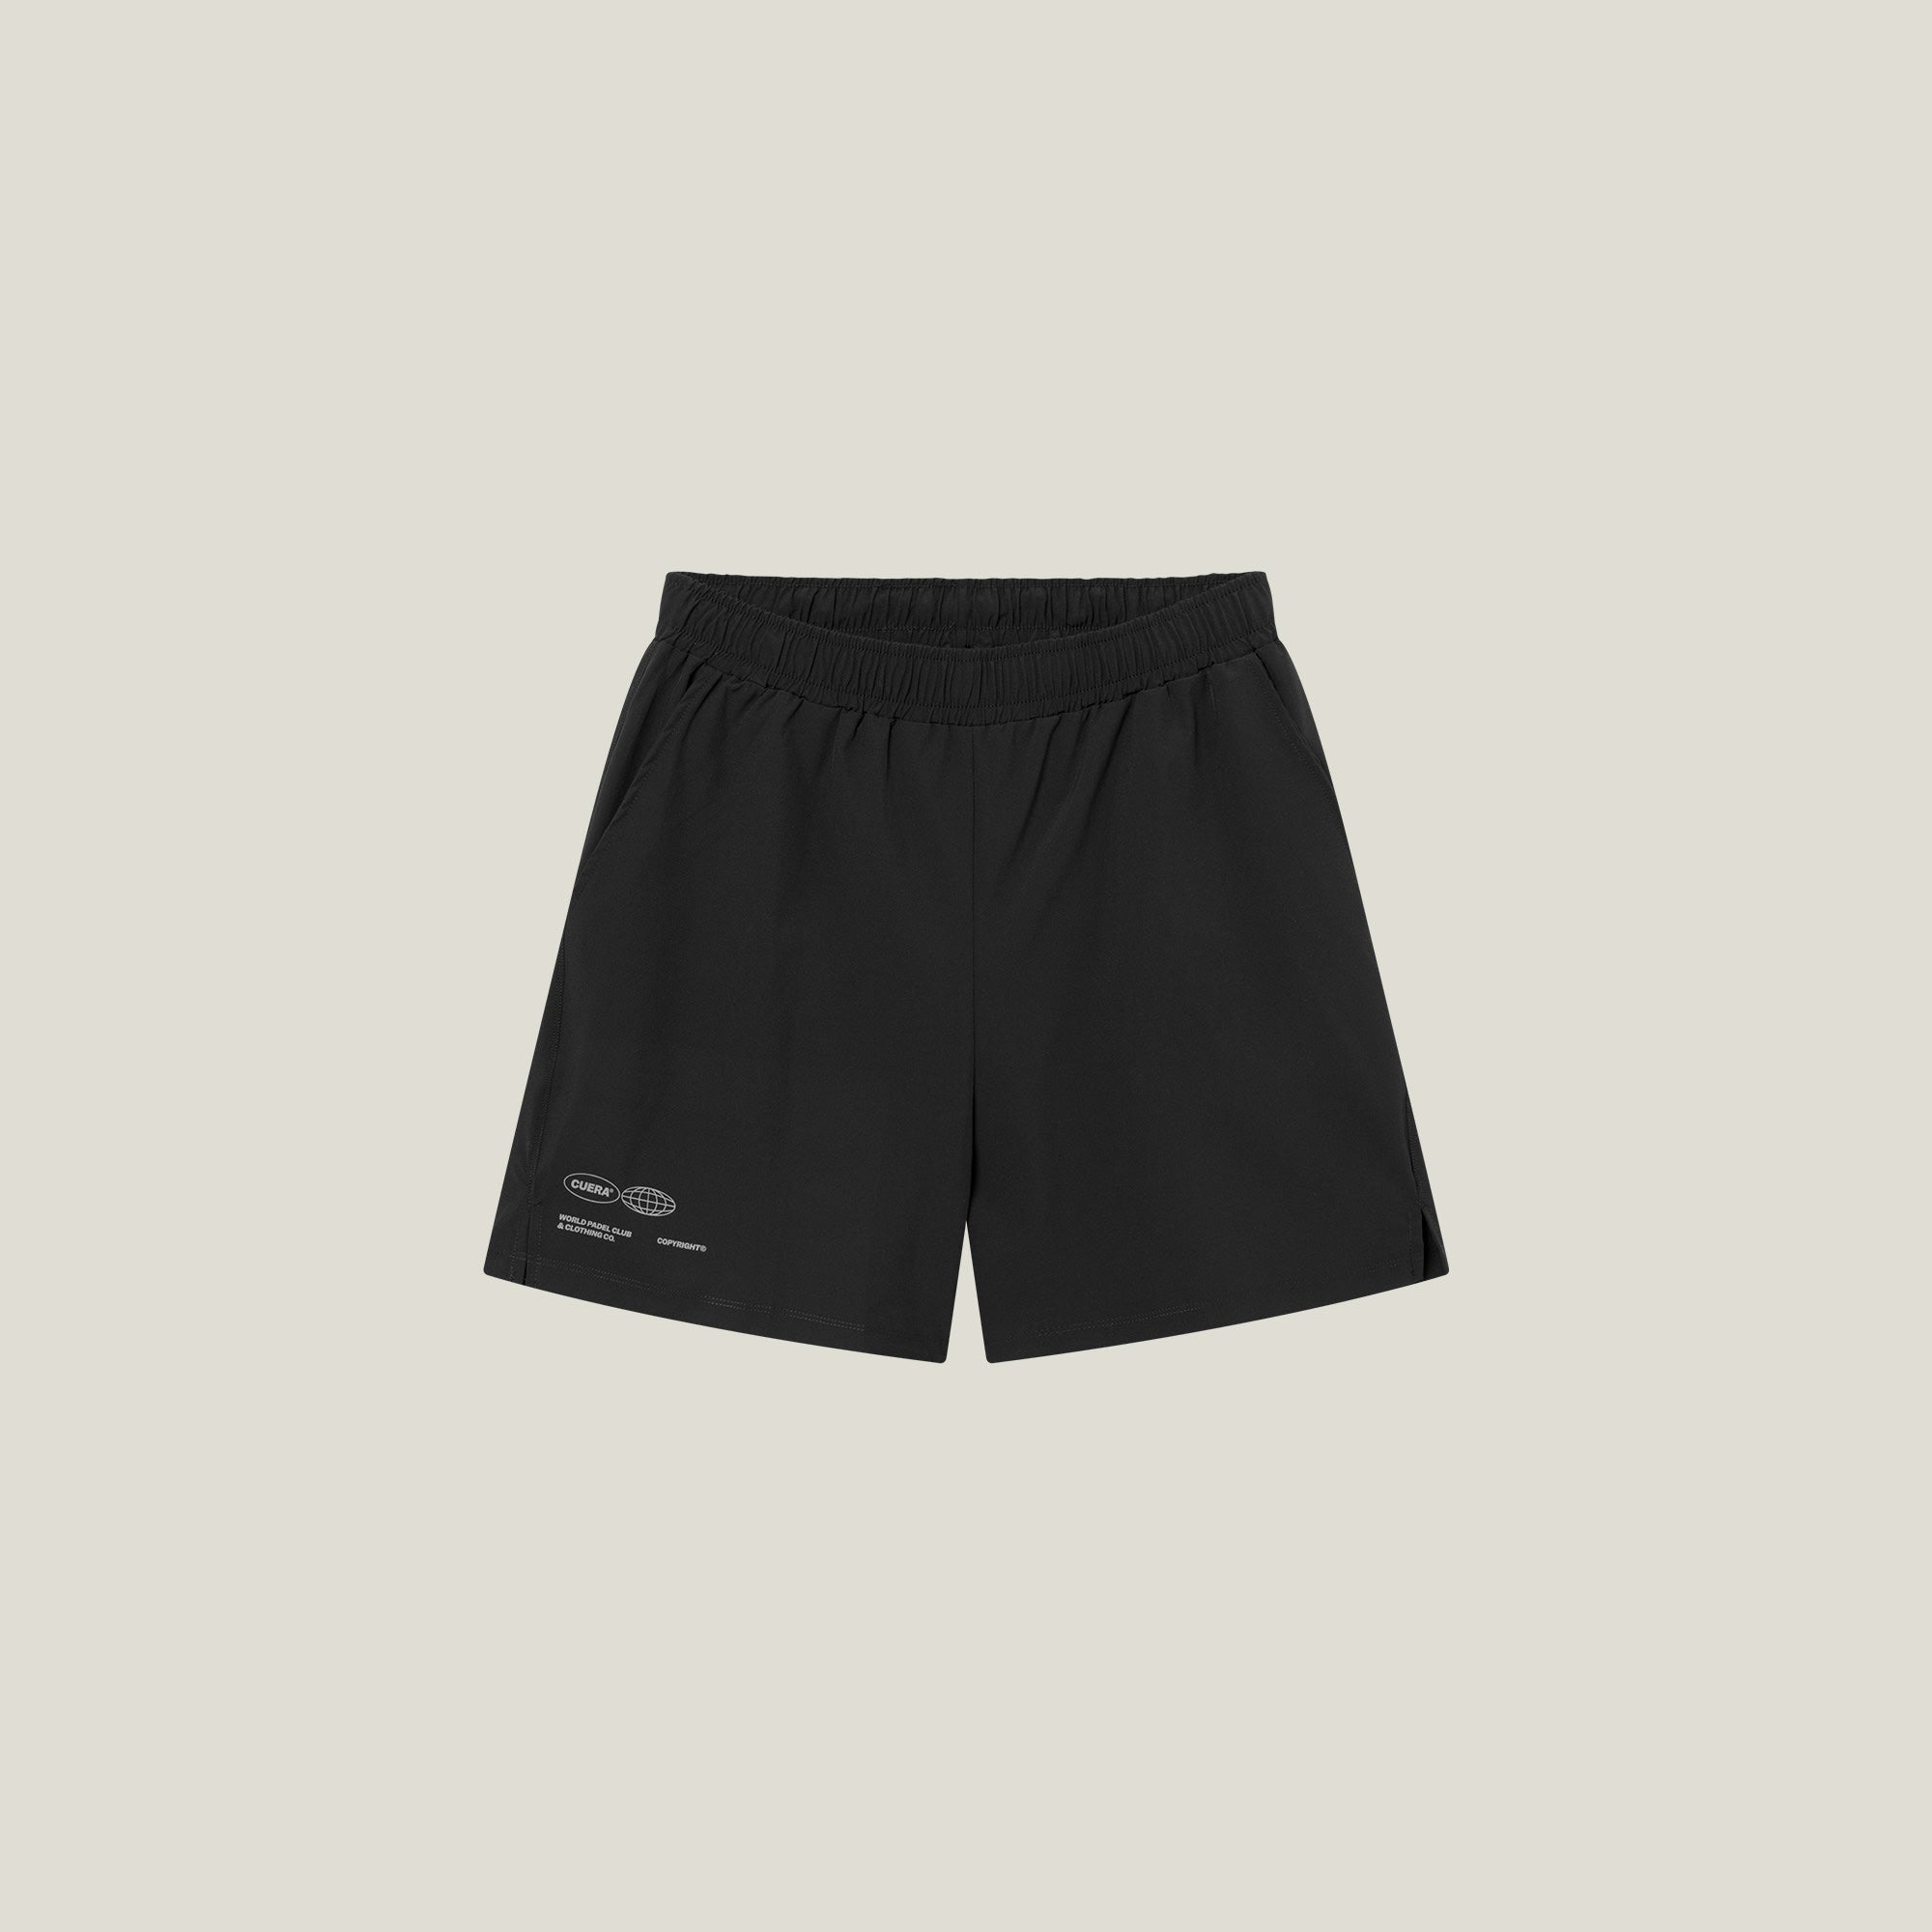 Mens Active Globe Shorts - Black